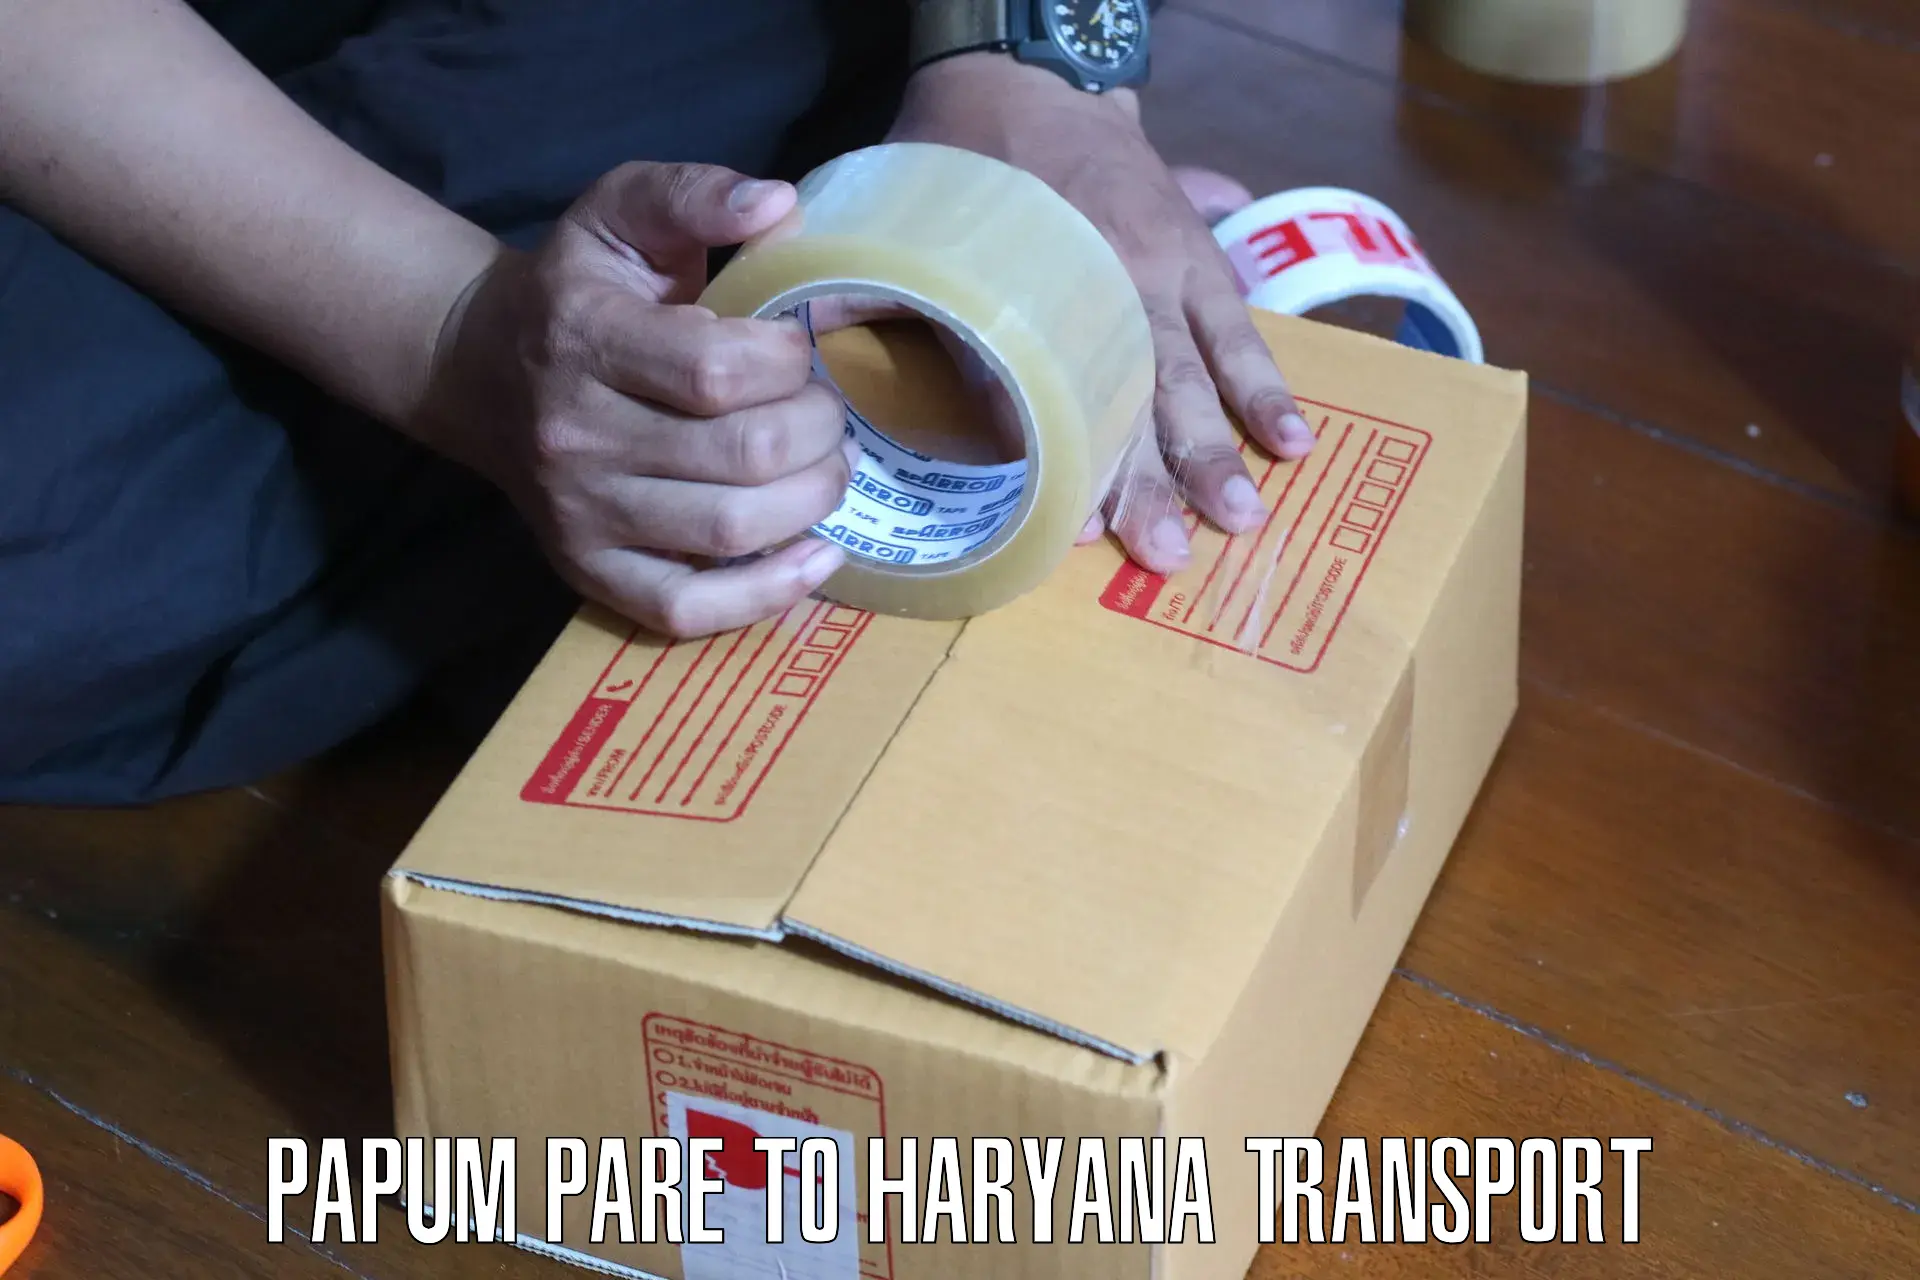 Shipping partner Papum Pare to Narwana